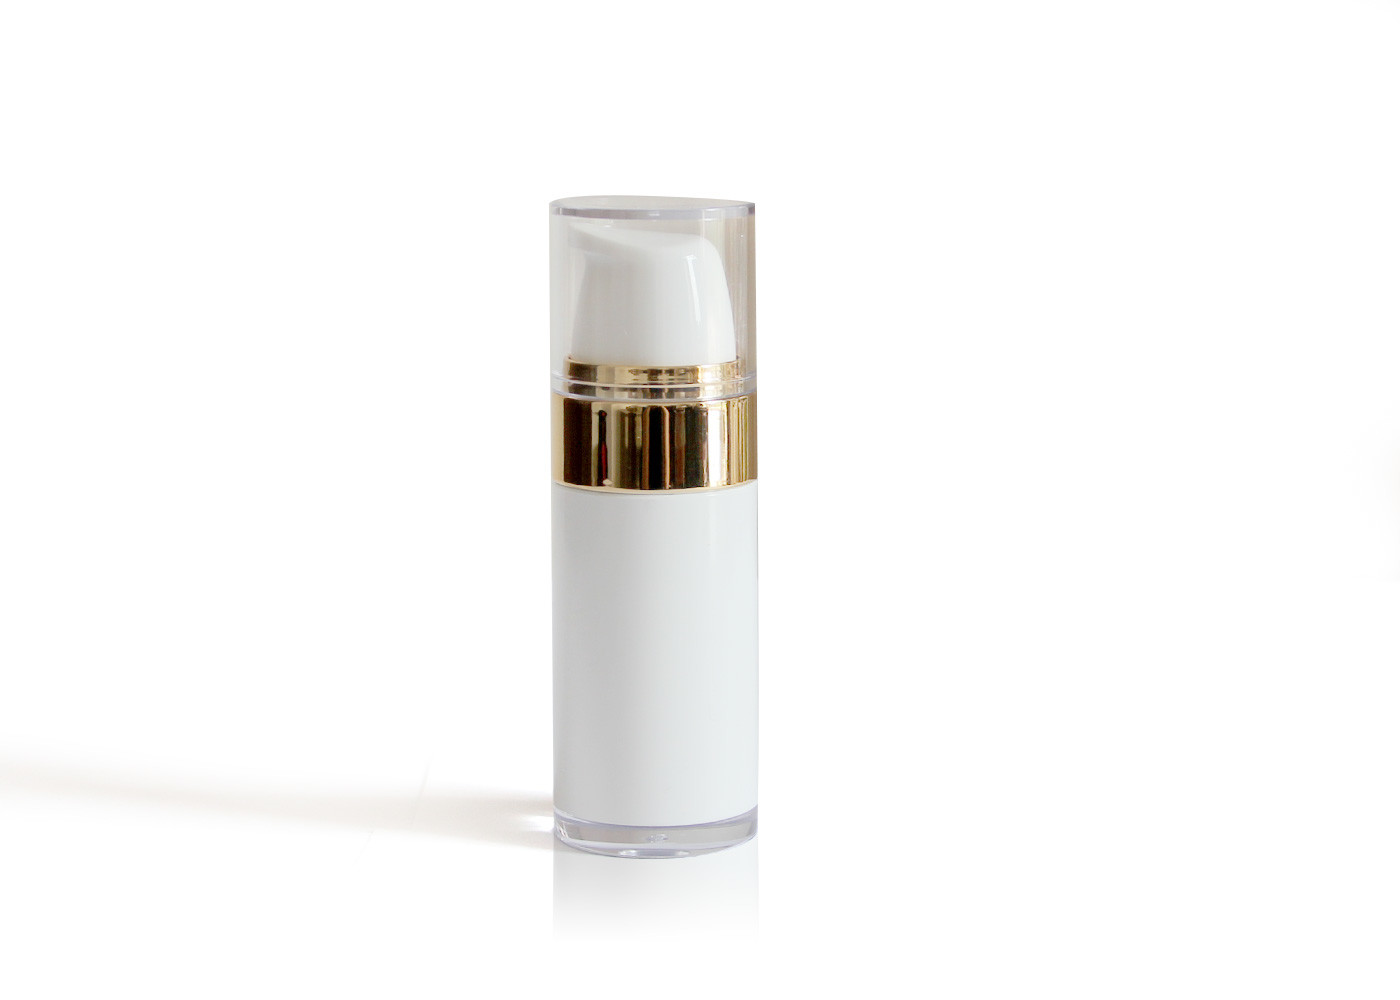  Reusable Foundation Pump Bottle / Facial Care White Airless Pump Bottle Manufactures